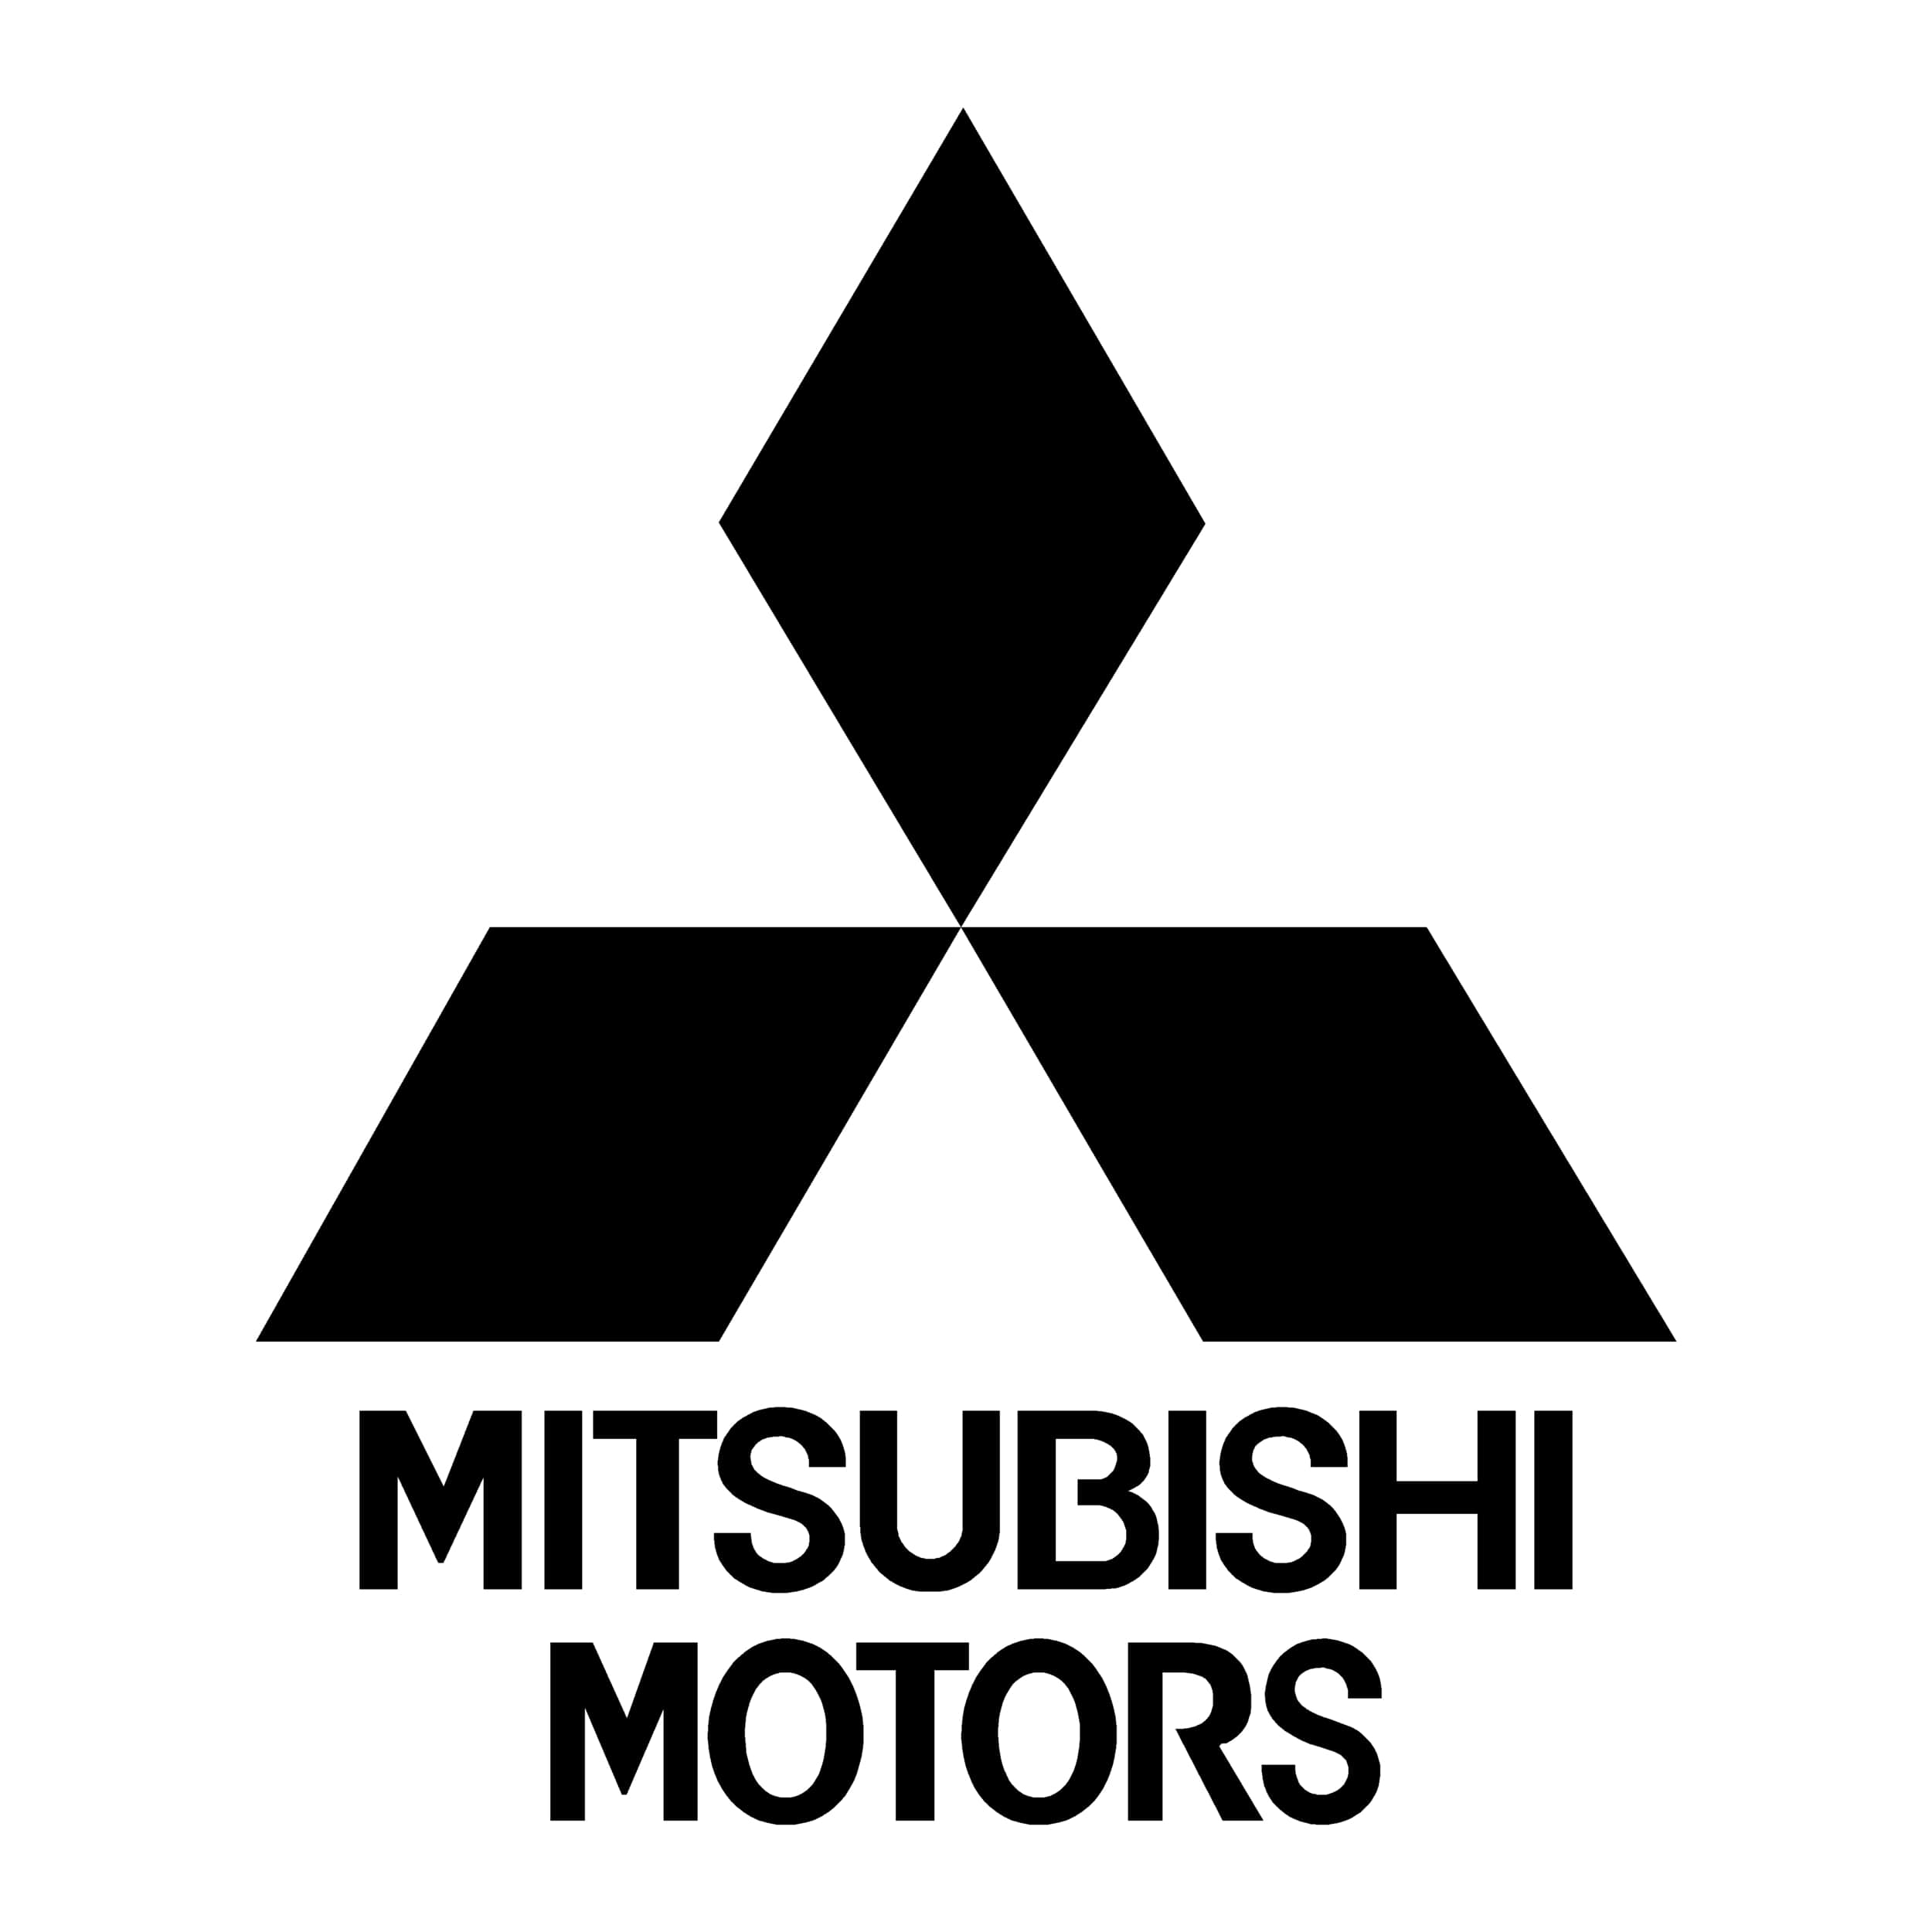 sticker-mitsubishi-ref-1-logo-l200-pajero-sport-4x4-land-tout-terrain-competition-rallye-autocollant-stickers-min